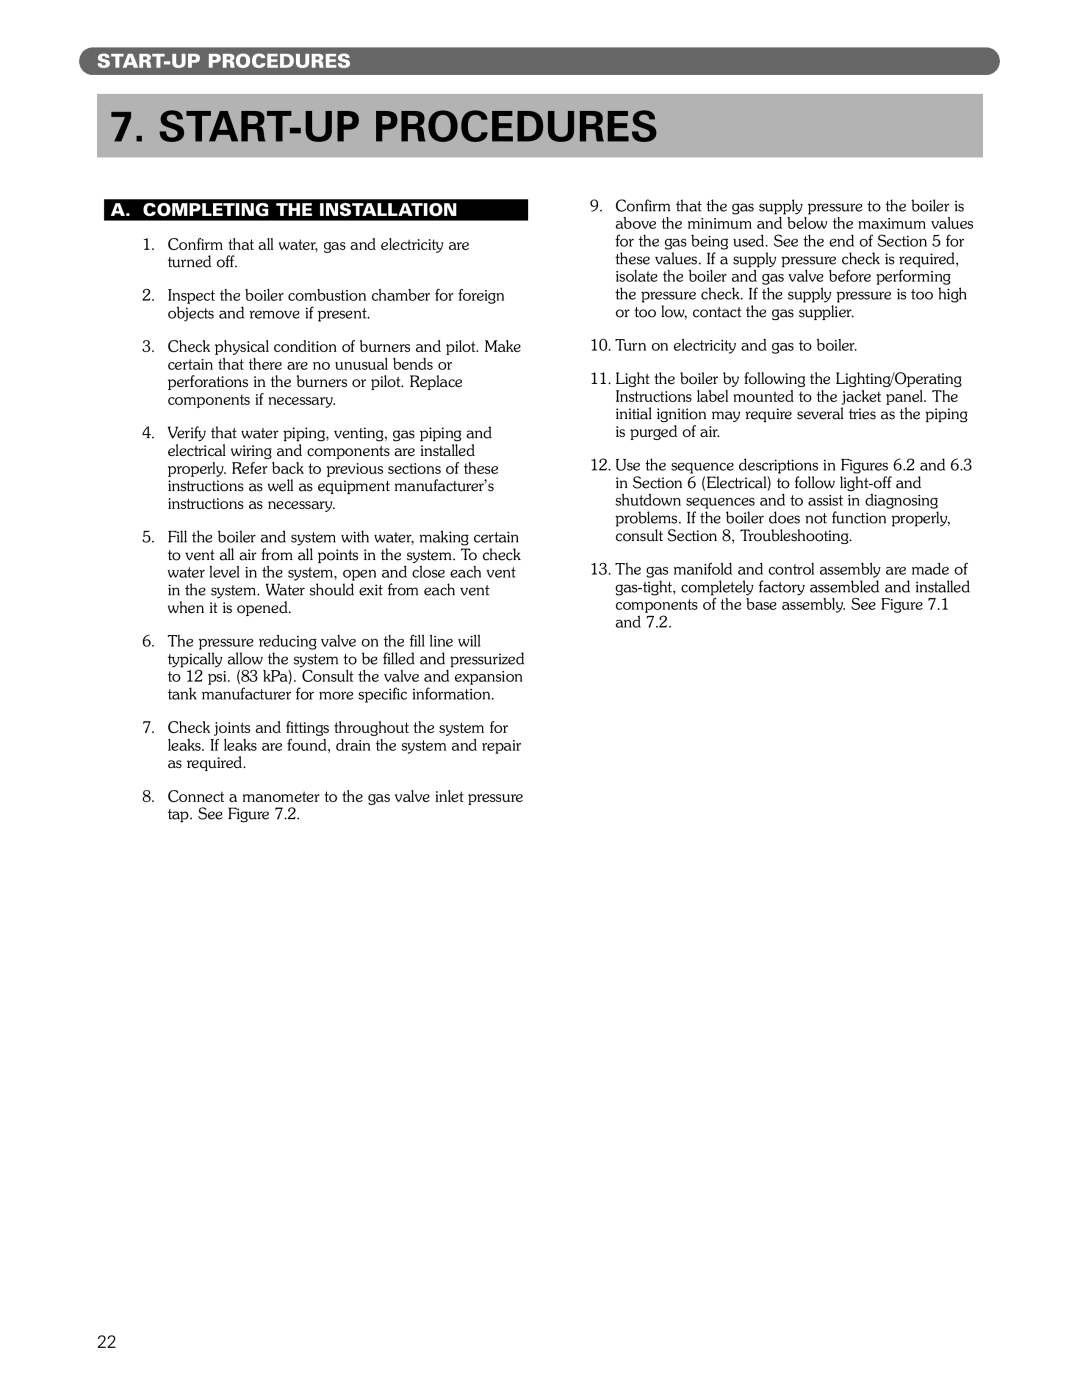 PB Heat DE manual Start-Upprocedures, A.Completing The Installation 